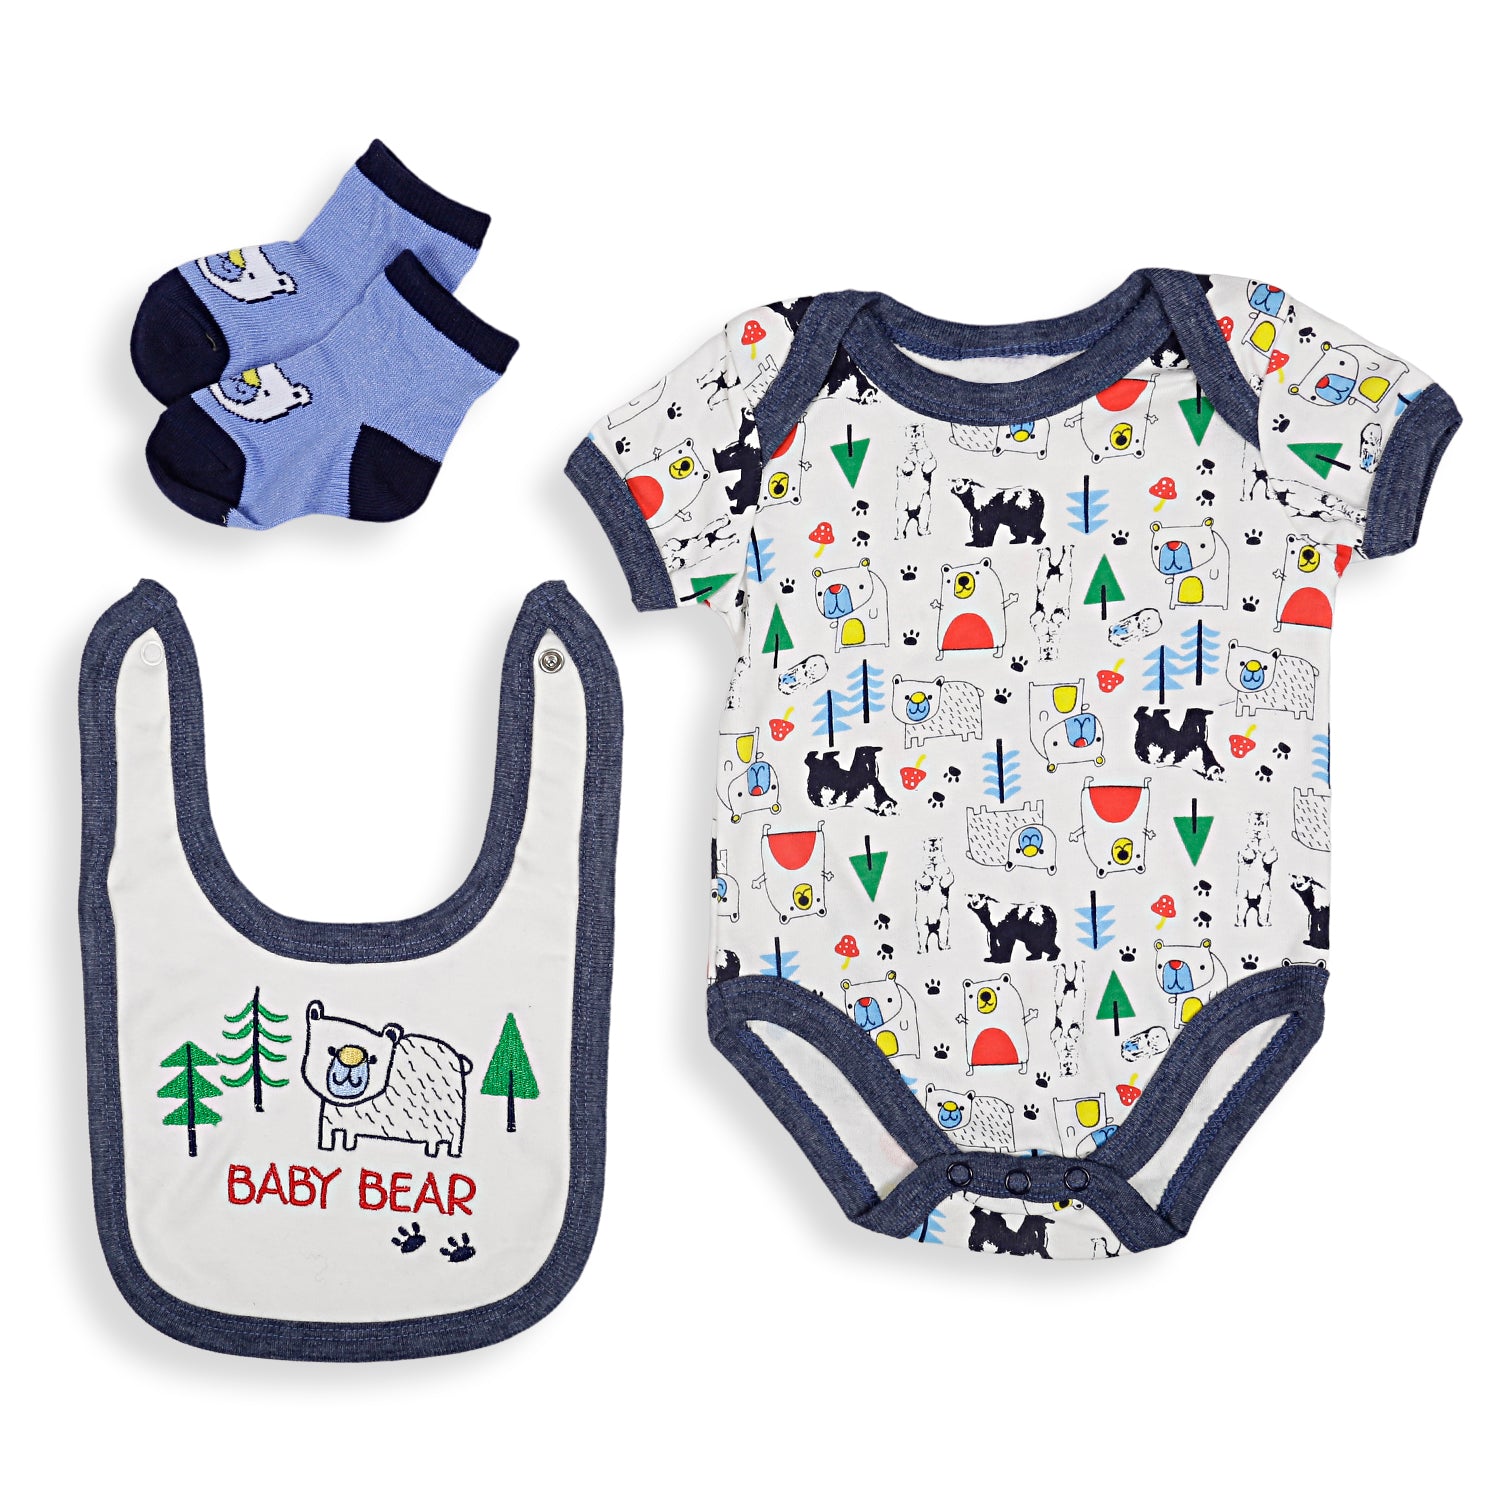 Baby Moo Adventurous Baby Boy Animal Blue 10 Pcs Gift Hamper - 0-9M Sizes Available - Baby Moo